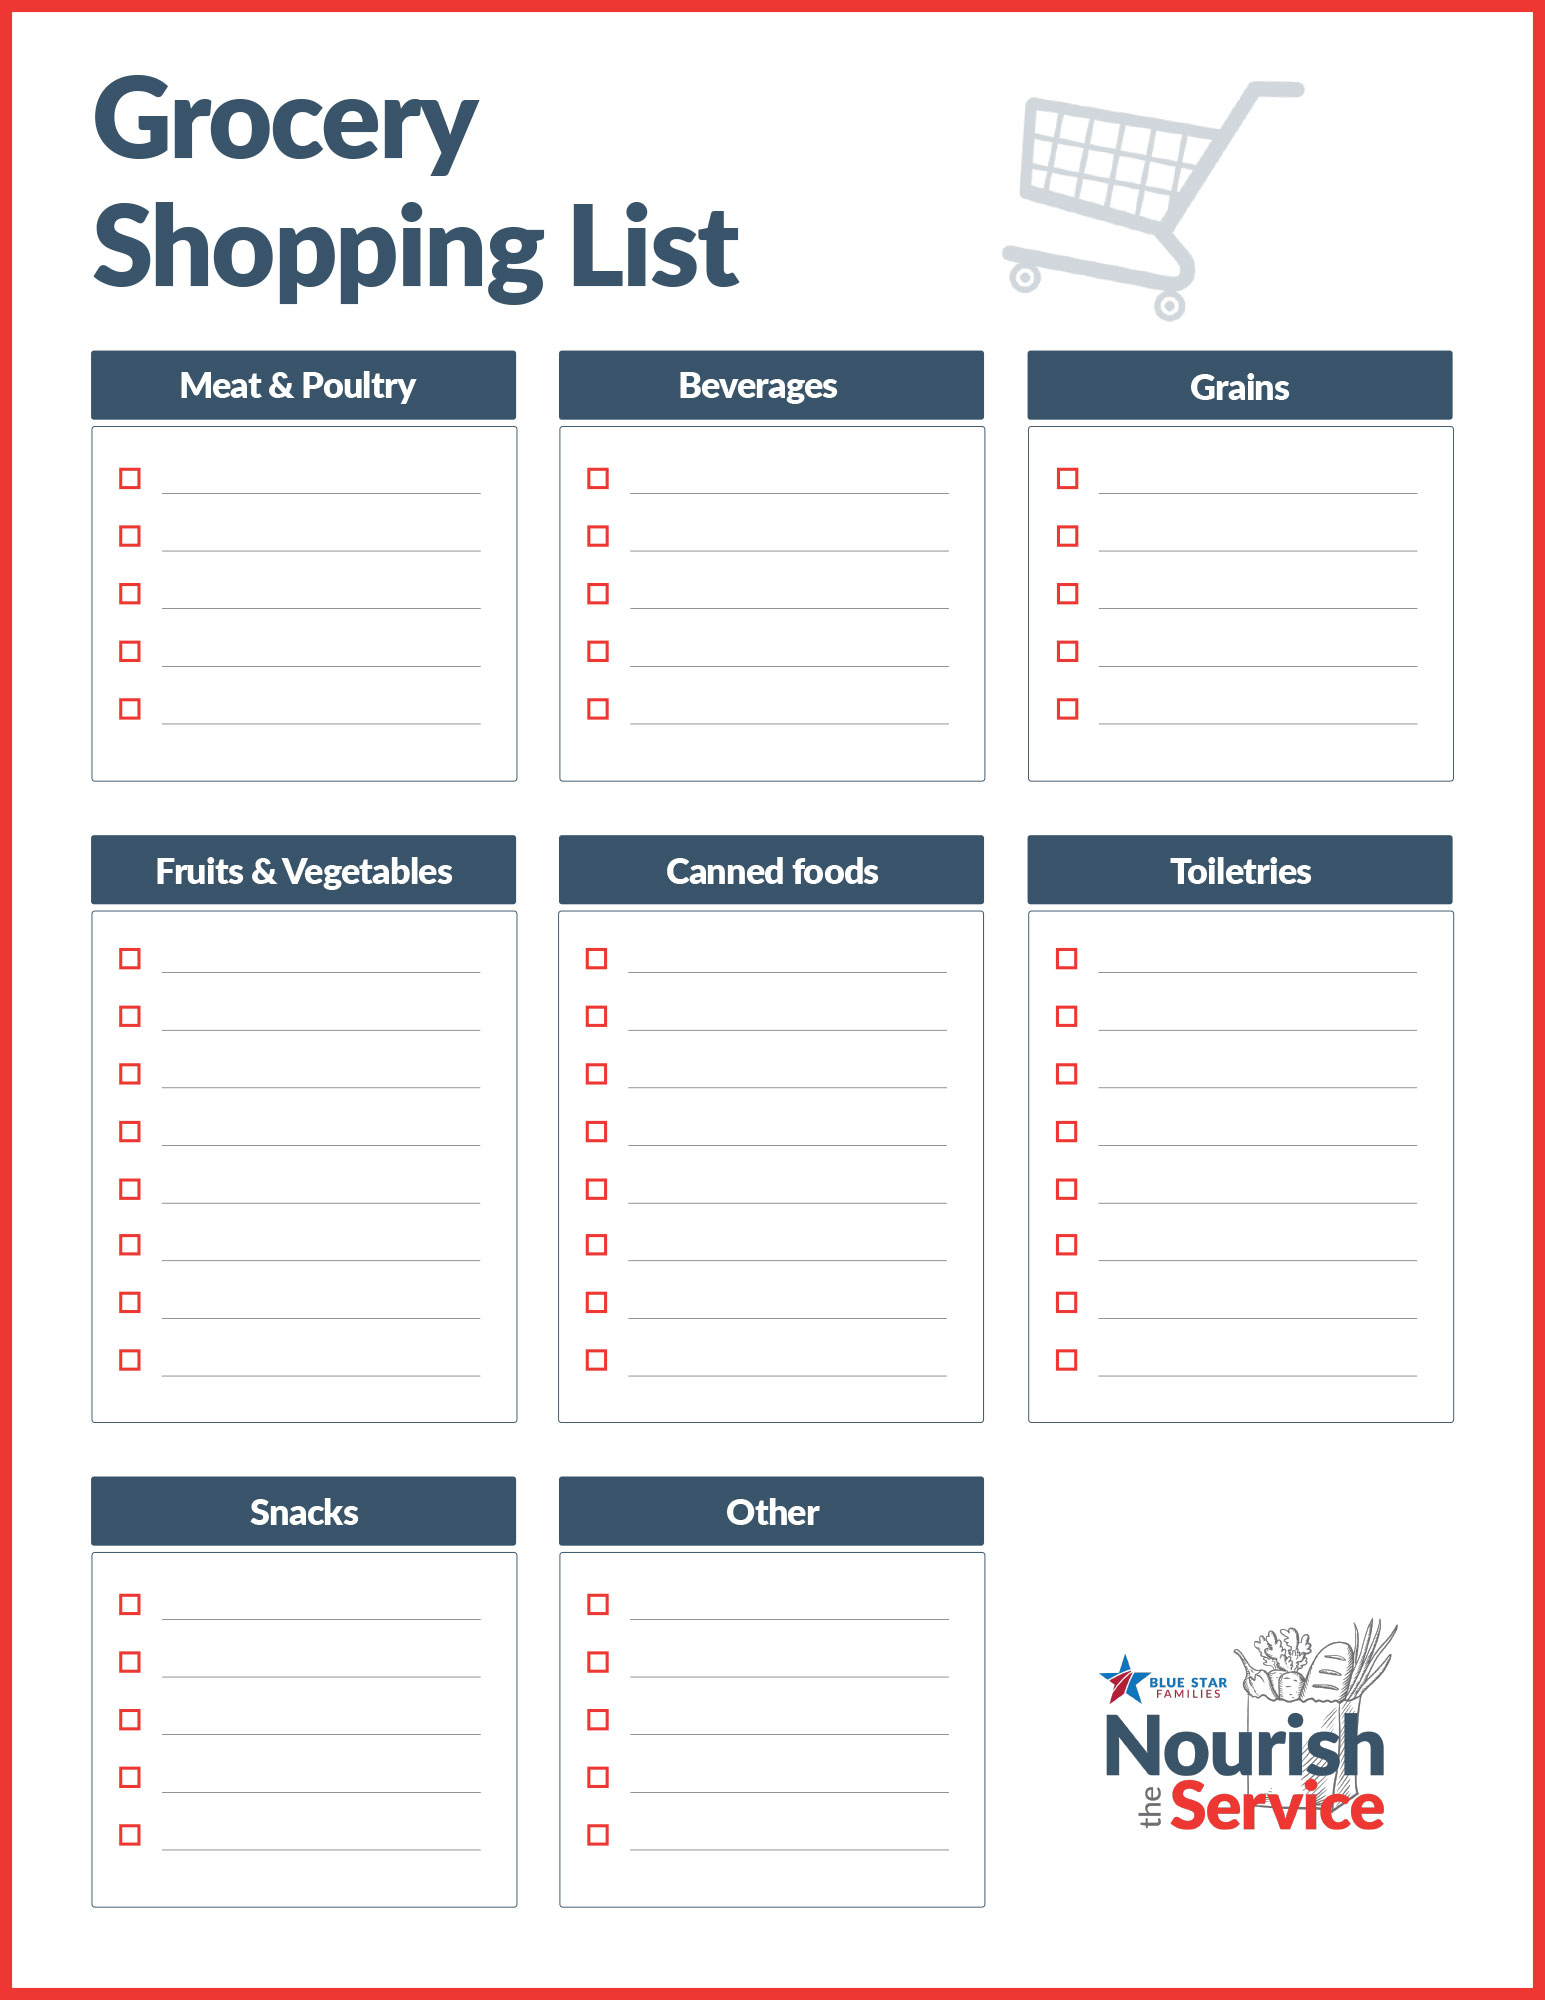 NtS-Shopping-List-cover